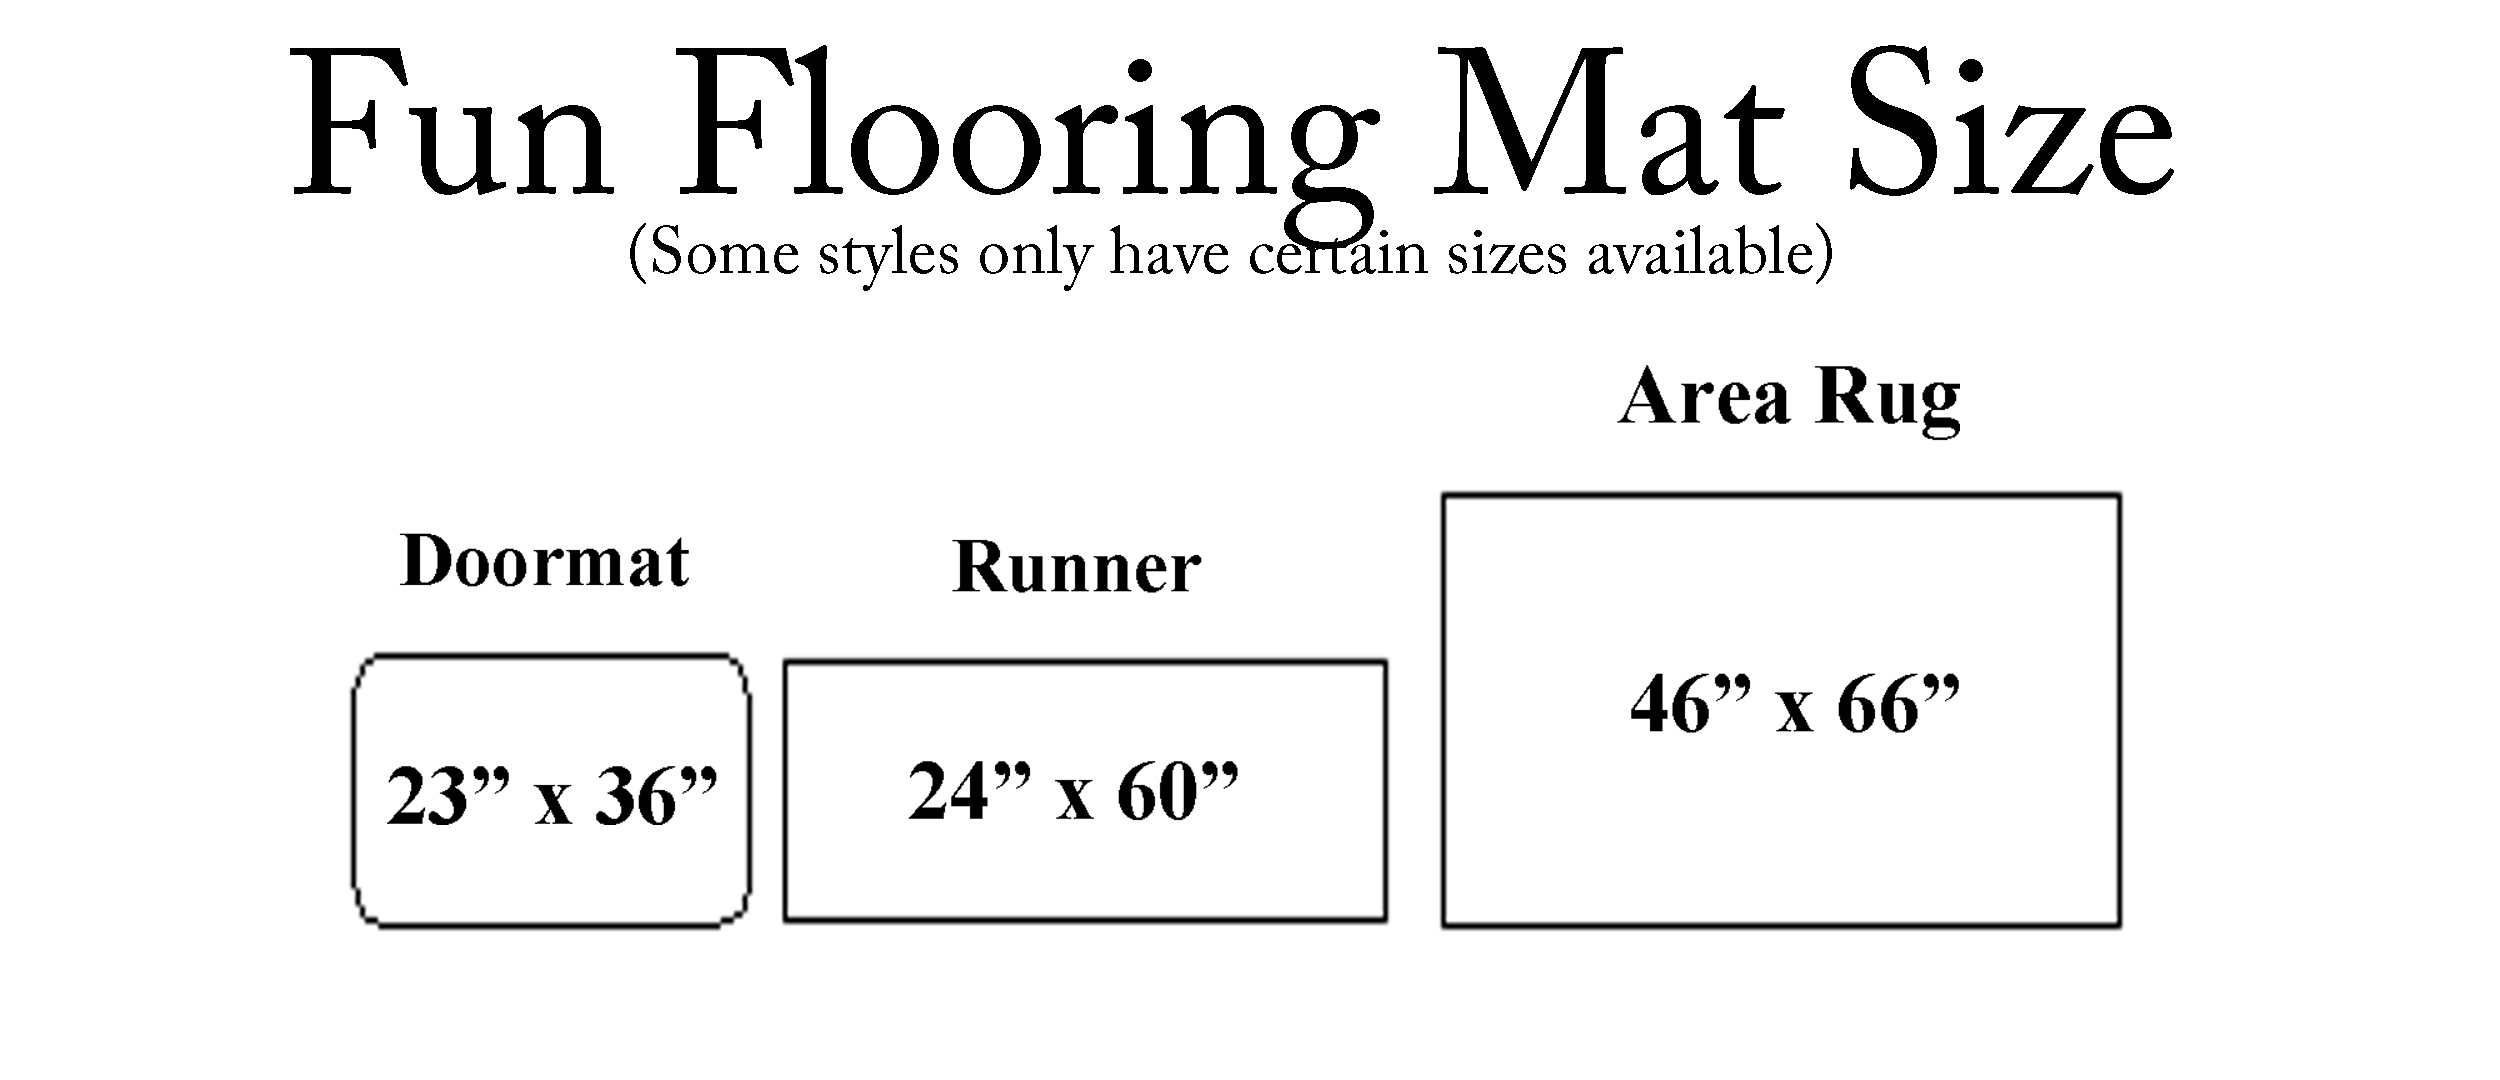 Siza chart for Fun Flooring Mats - Doormat, Area Mat and Runner Mat image by Everything Doormats.